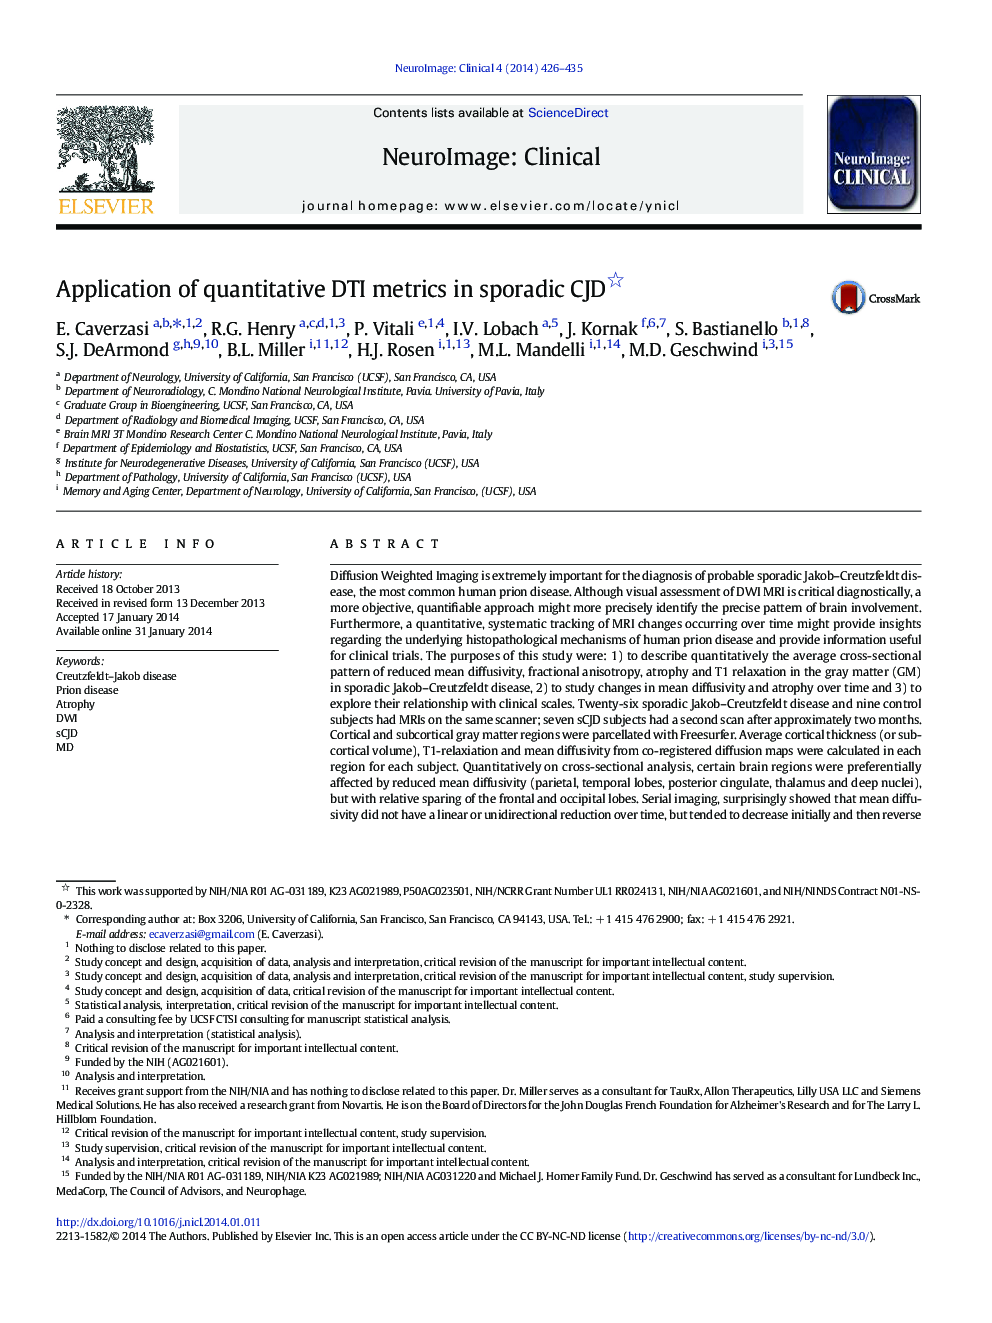 Application of quantitative DTI metrics in sporadic CJD 